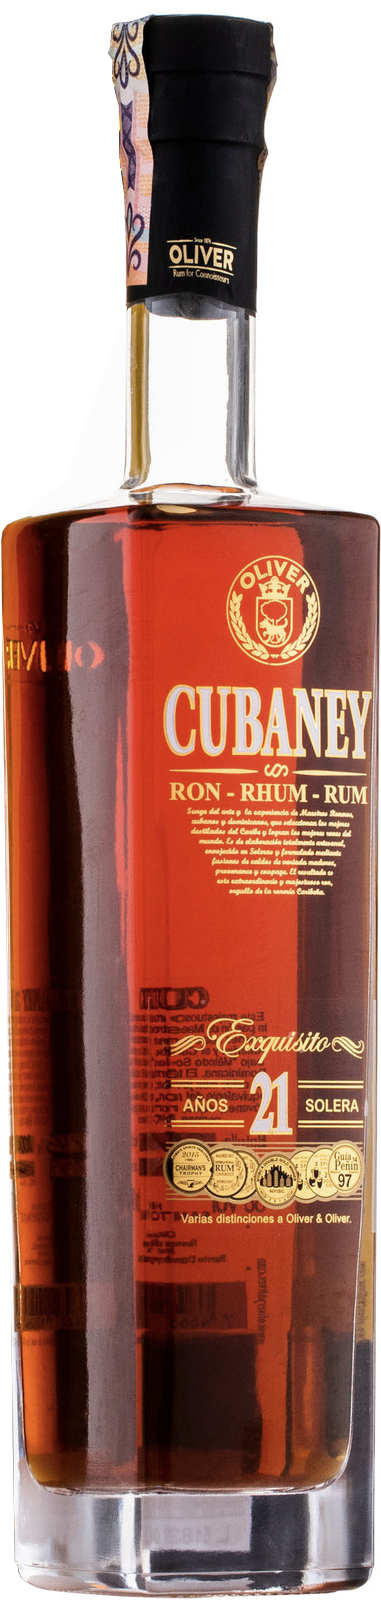 Cubaney Exquisito 21 38% 0,7l